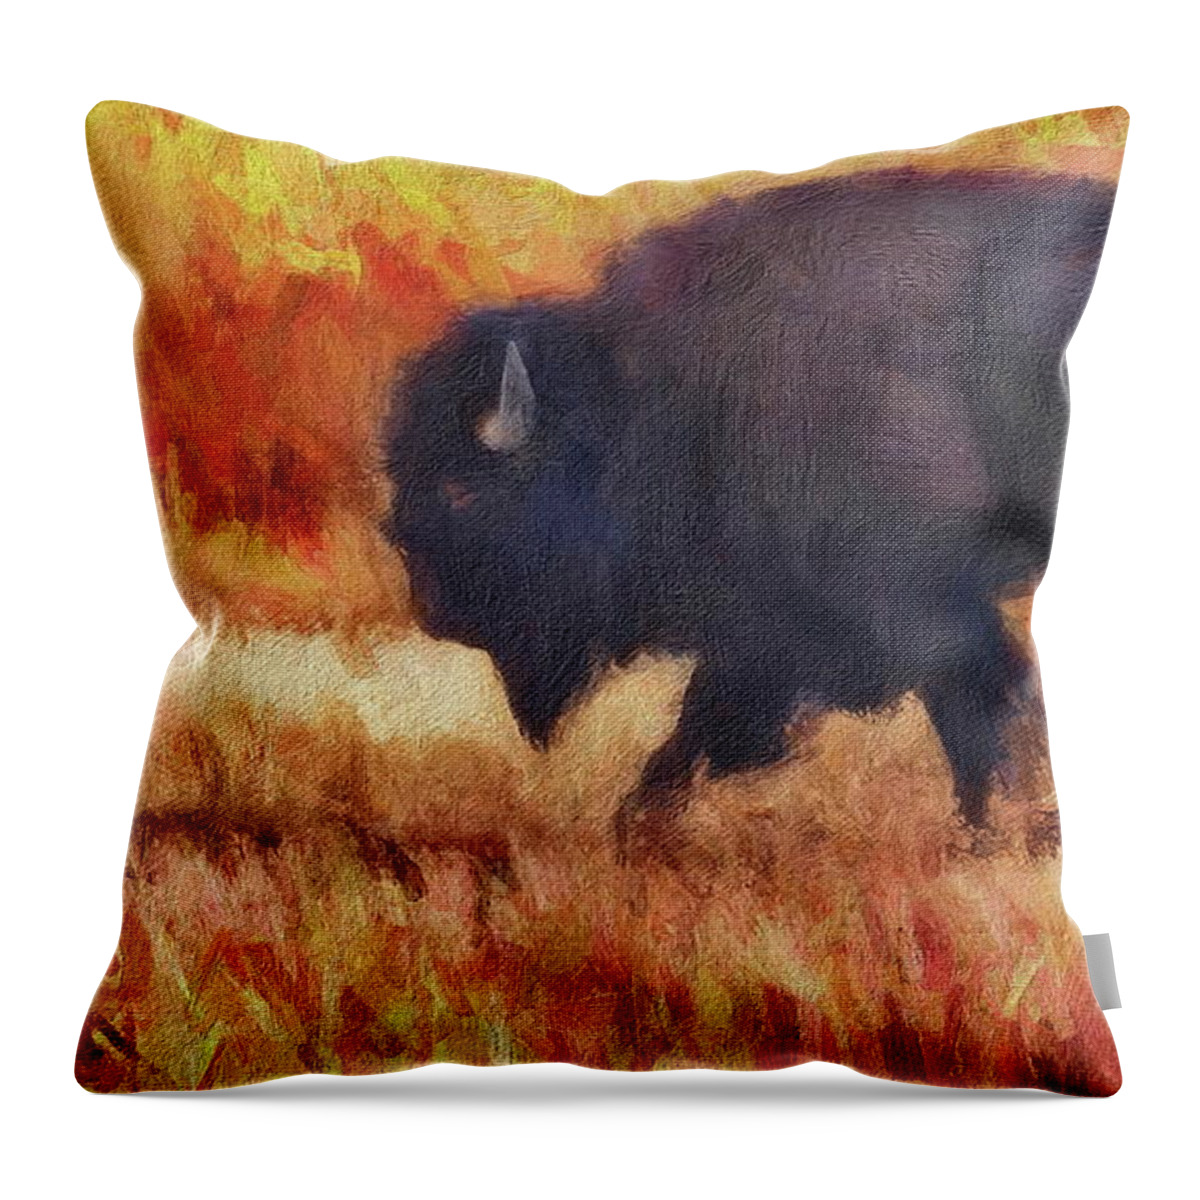 Buffalo Throw Pillow featuring the digital art Yellowstone Bison - Prehistoric by Russ Harris